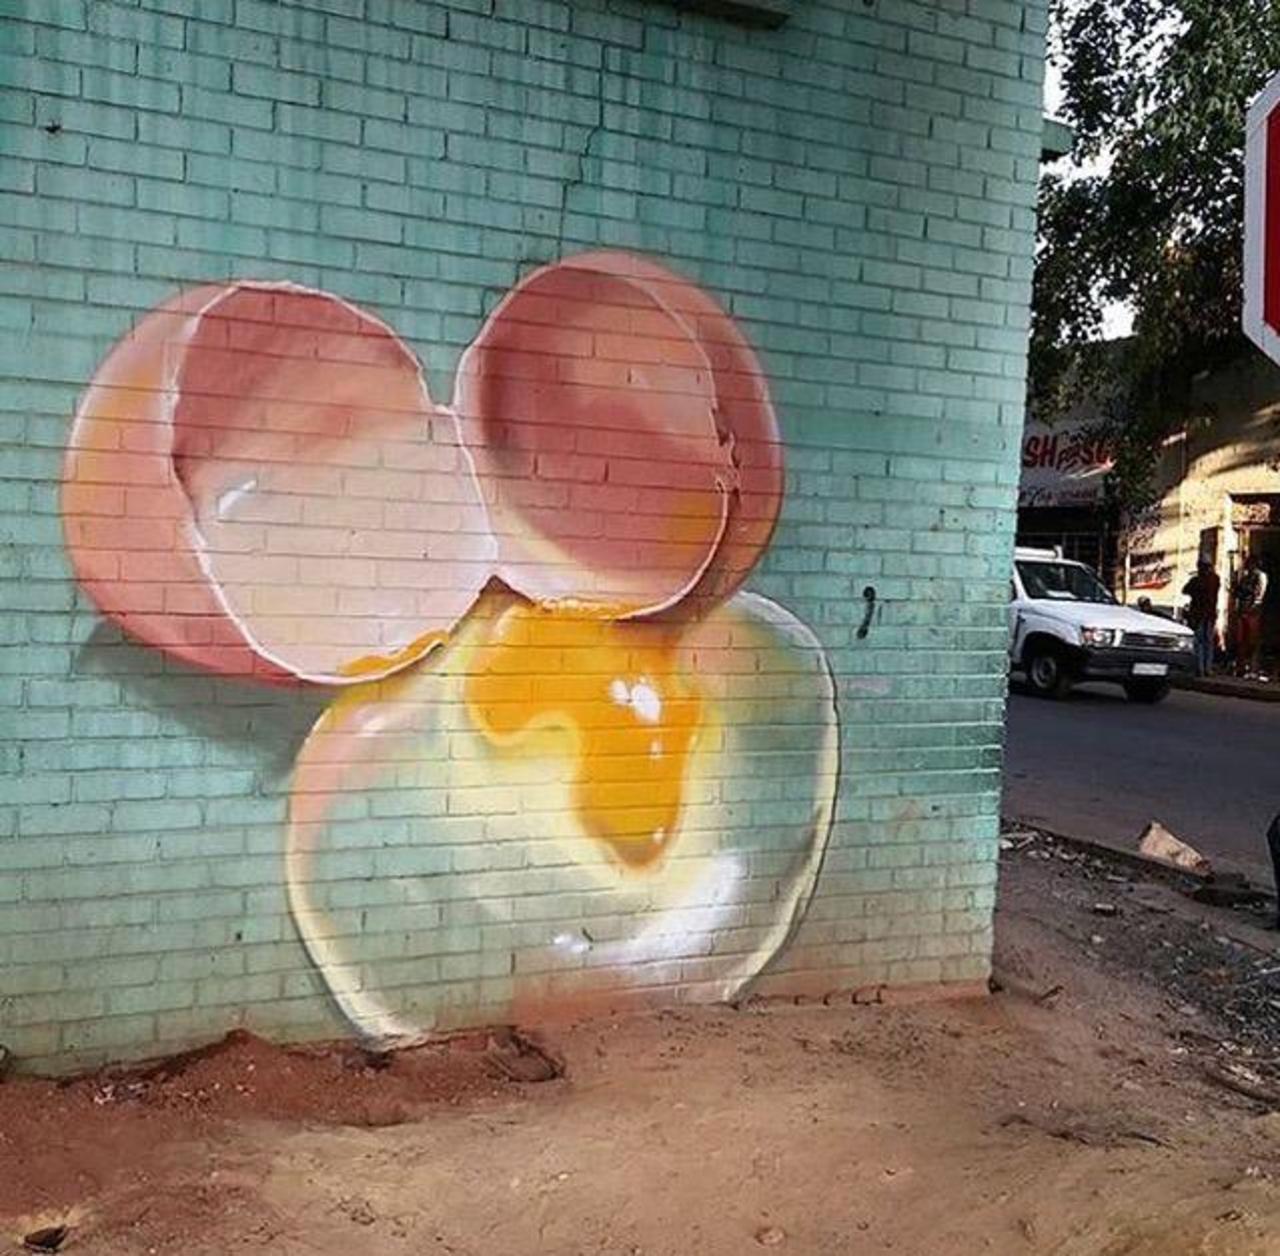 Street Art by falco1 in Johannesburg SA  

#art #graffiti #mural #streetart http://t.co/D9SR9CXTYT